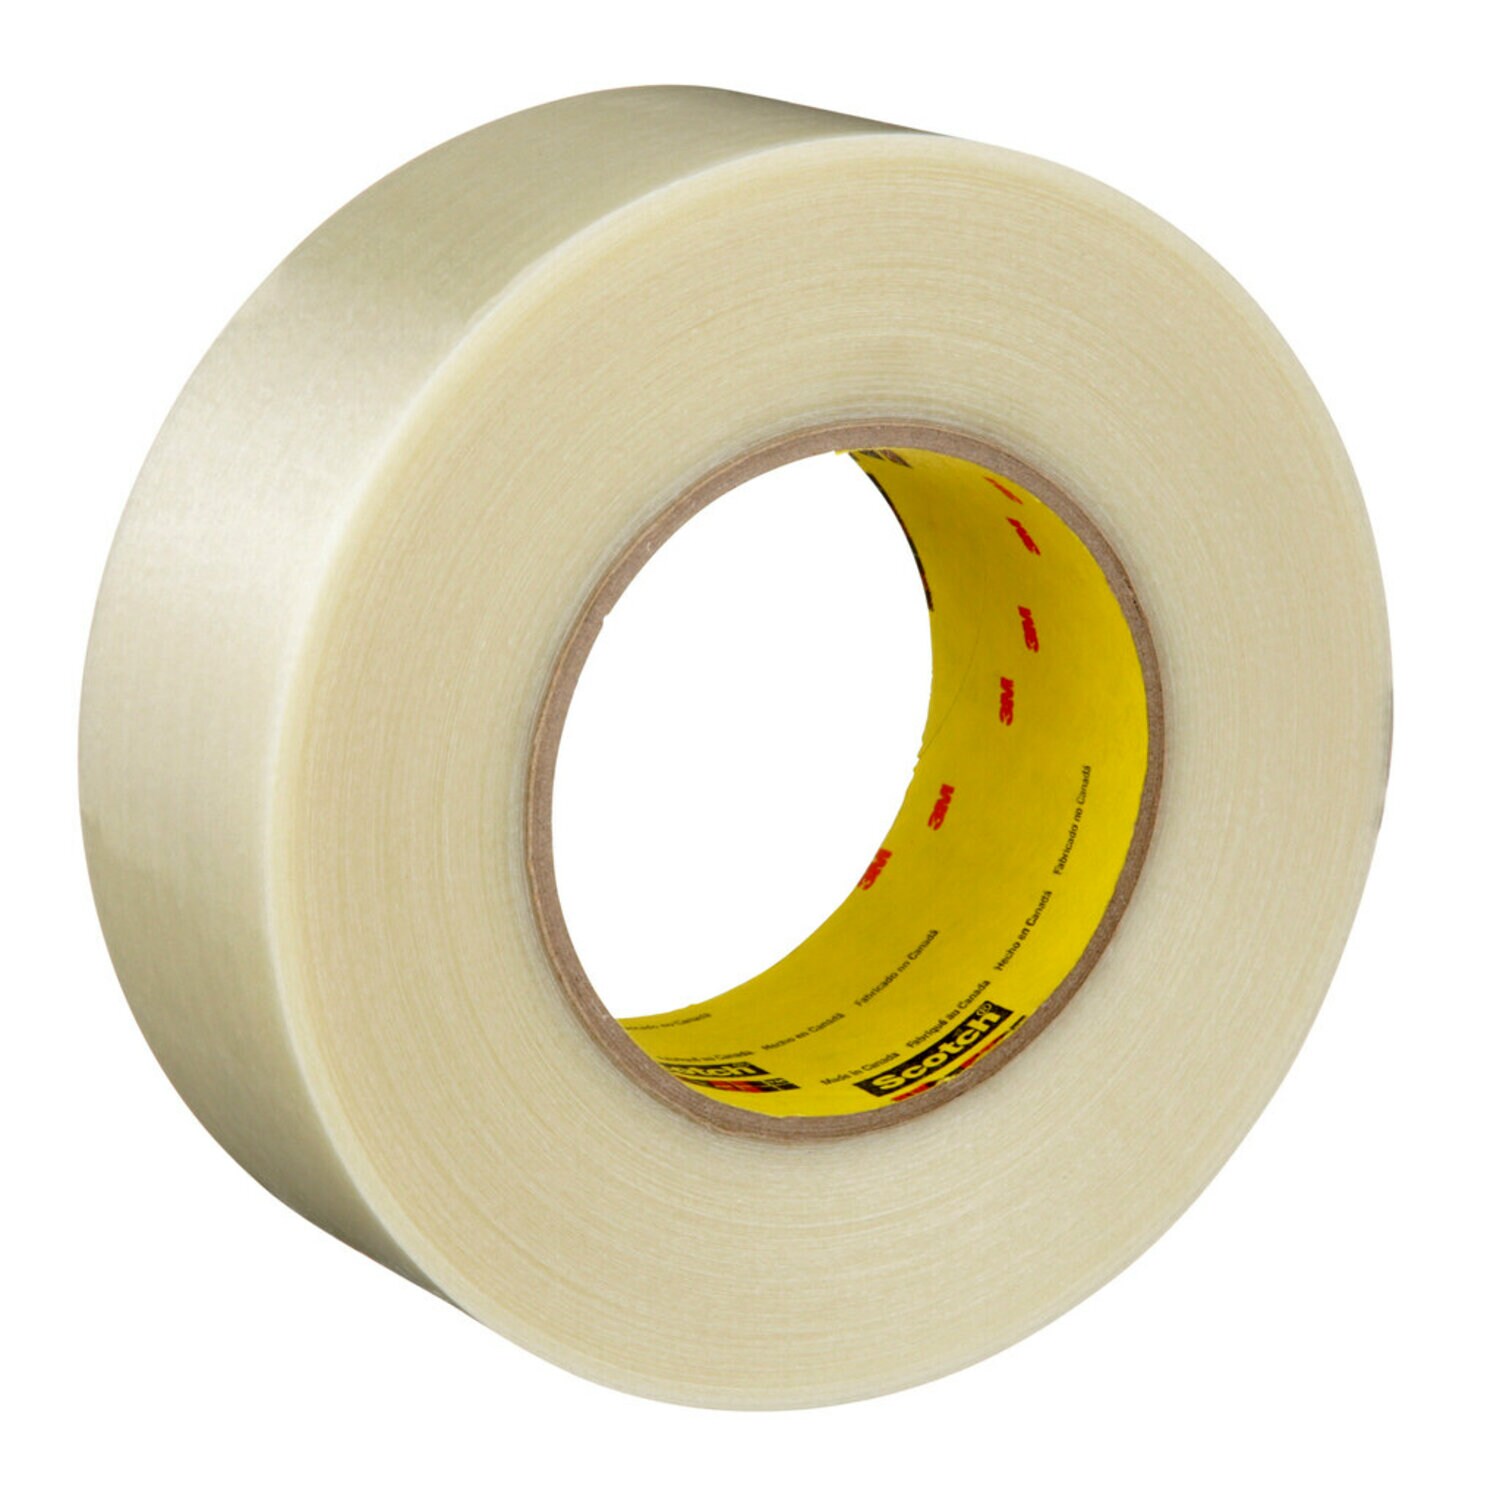 7000124623 - Scotch Filament Tape 8919MSR, Clear, 72 mm x 55 m, 7 mil, 12 rolls per
case